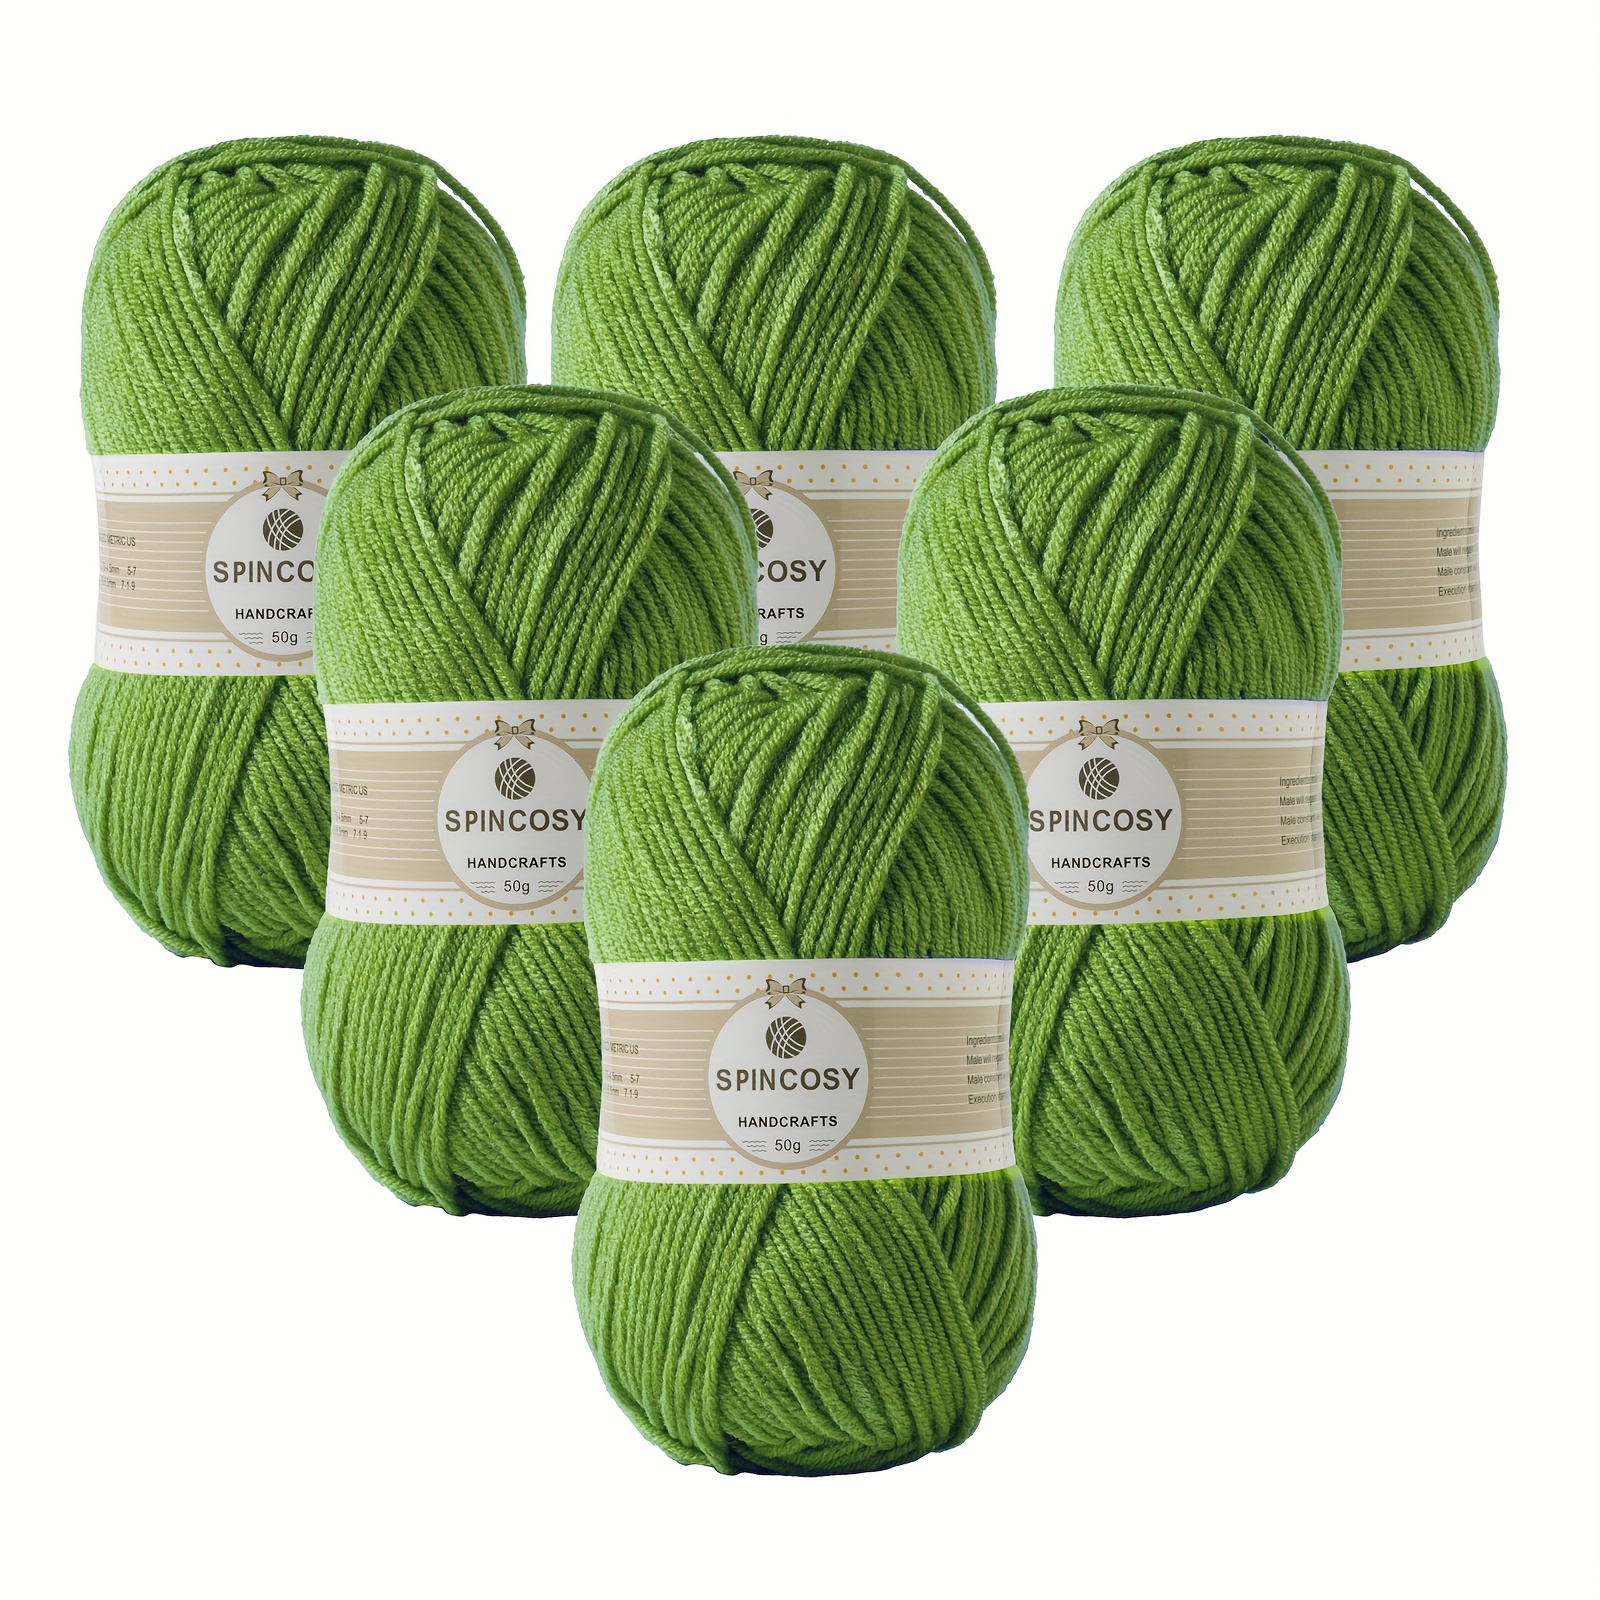 Women's Institute Dark Green Soft and Smooth Aran Yarn 400g